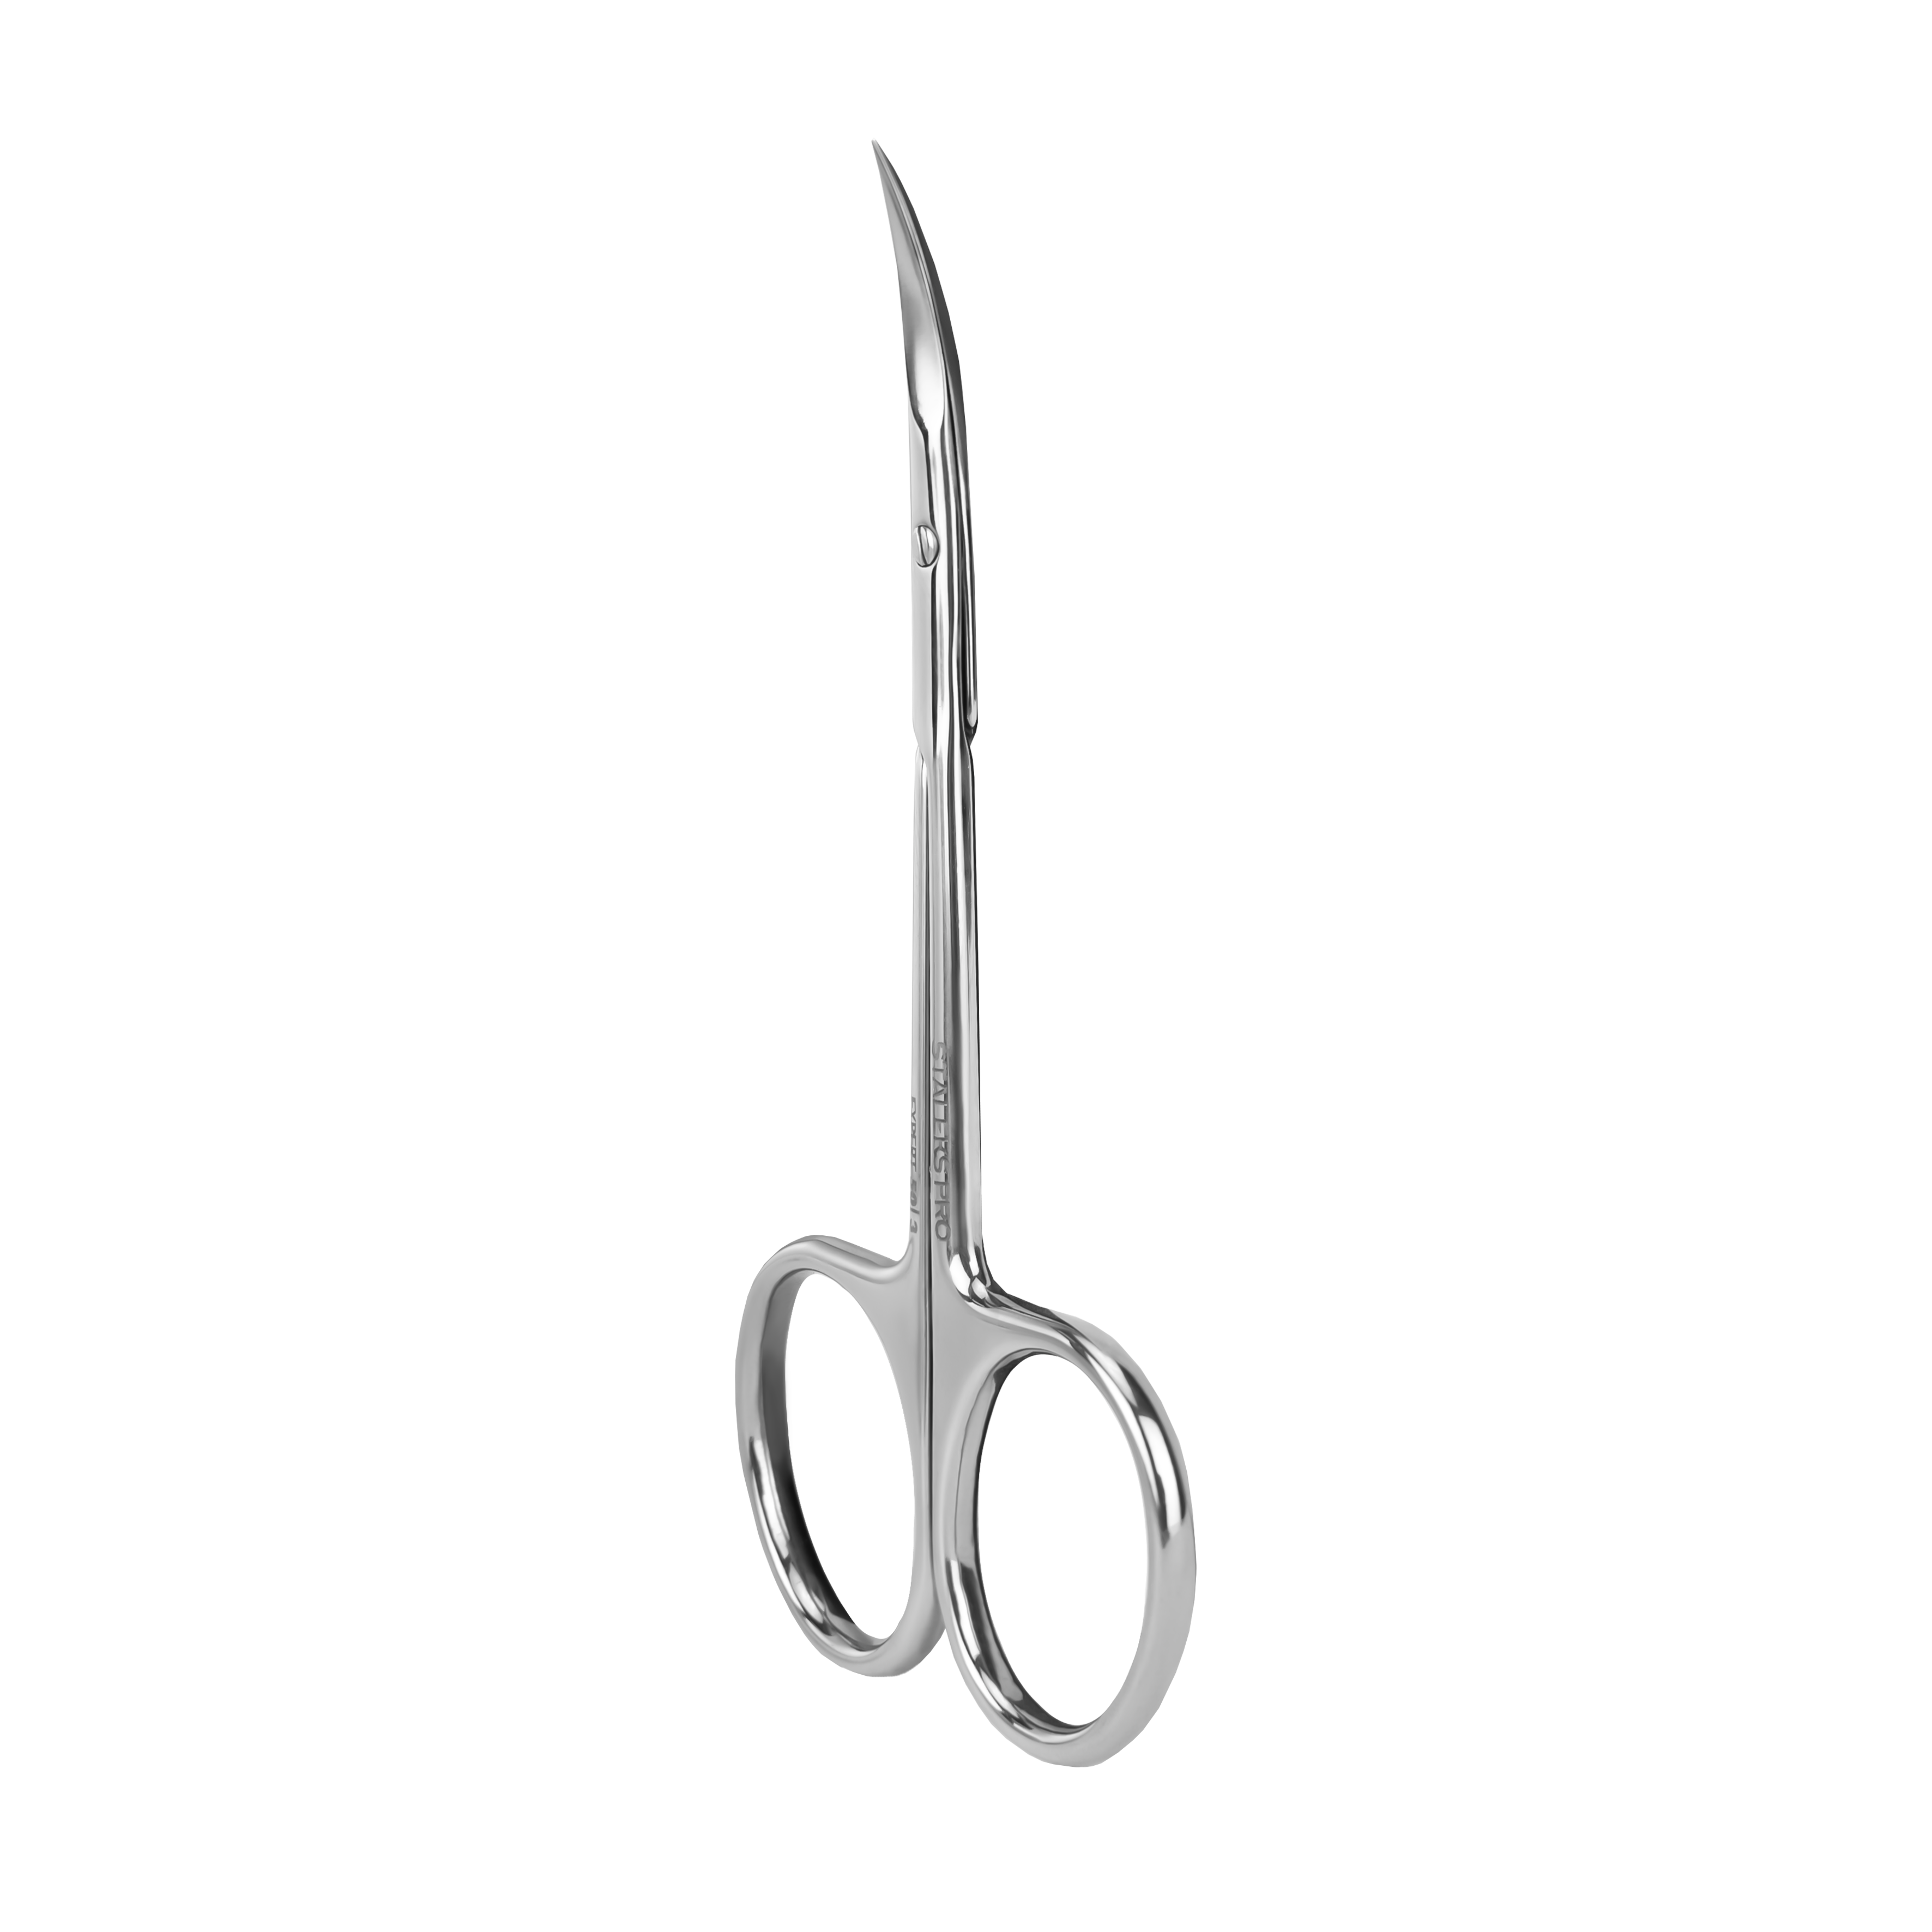 Staleks Professional cuticle scissors EXPERT 50 TYPE 3